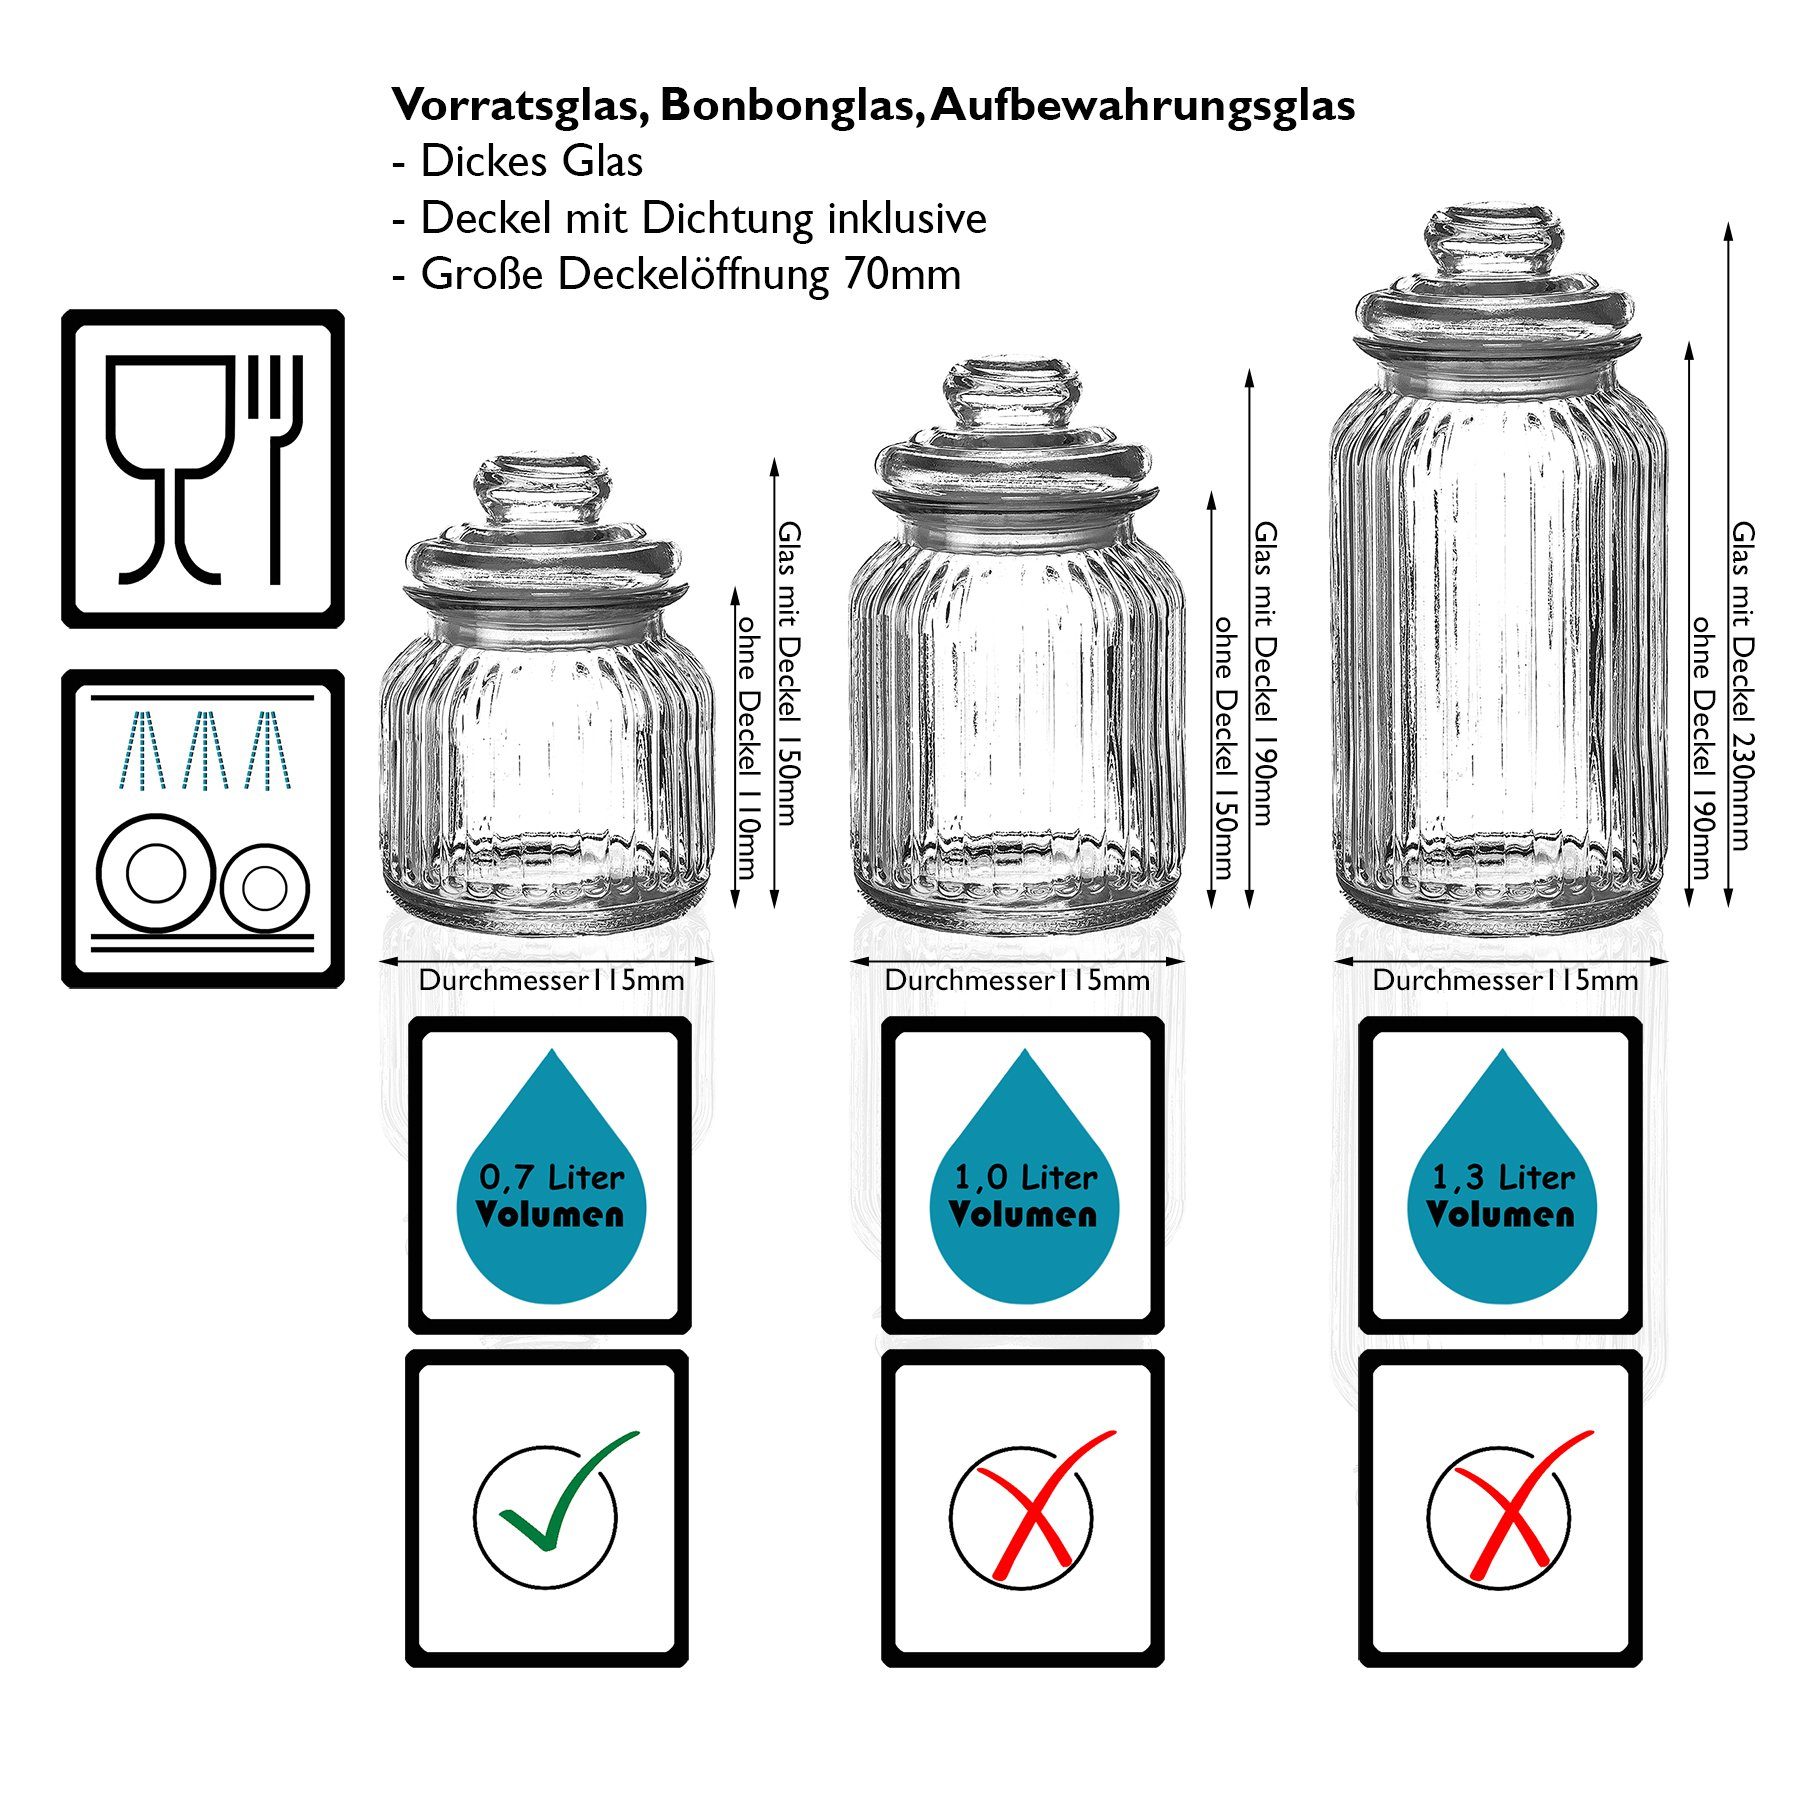 Nostalgie Vorratsdose Liter (2-tlg) BigDean Glas, Bonbonglas 2x Vorratsglas 0,7